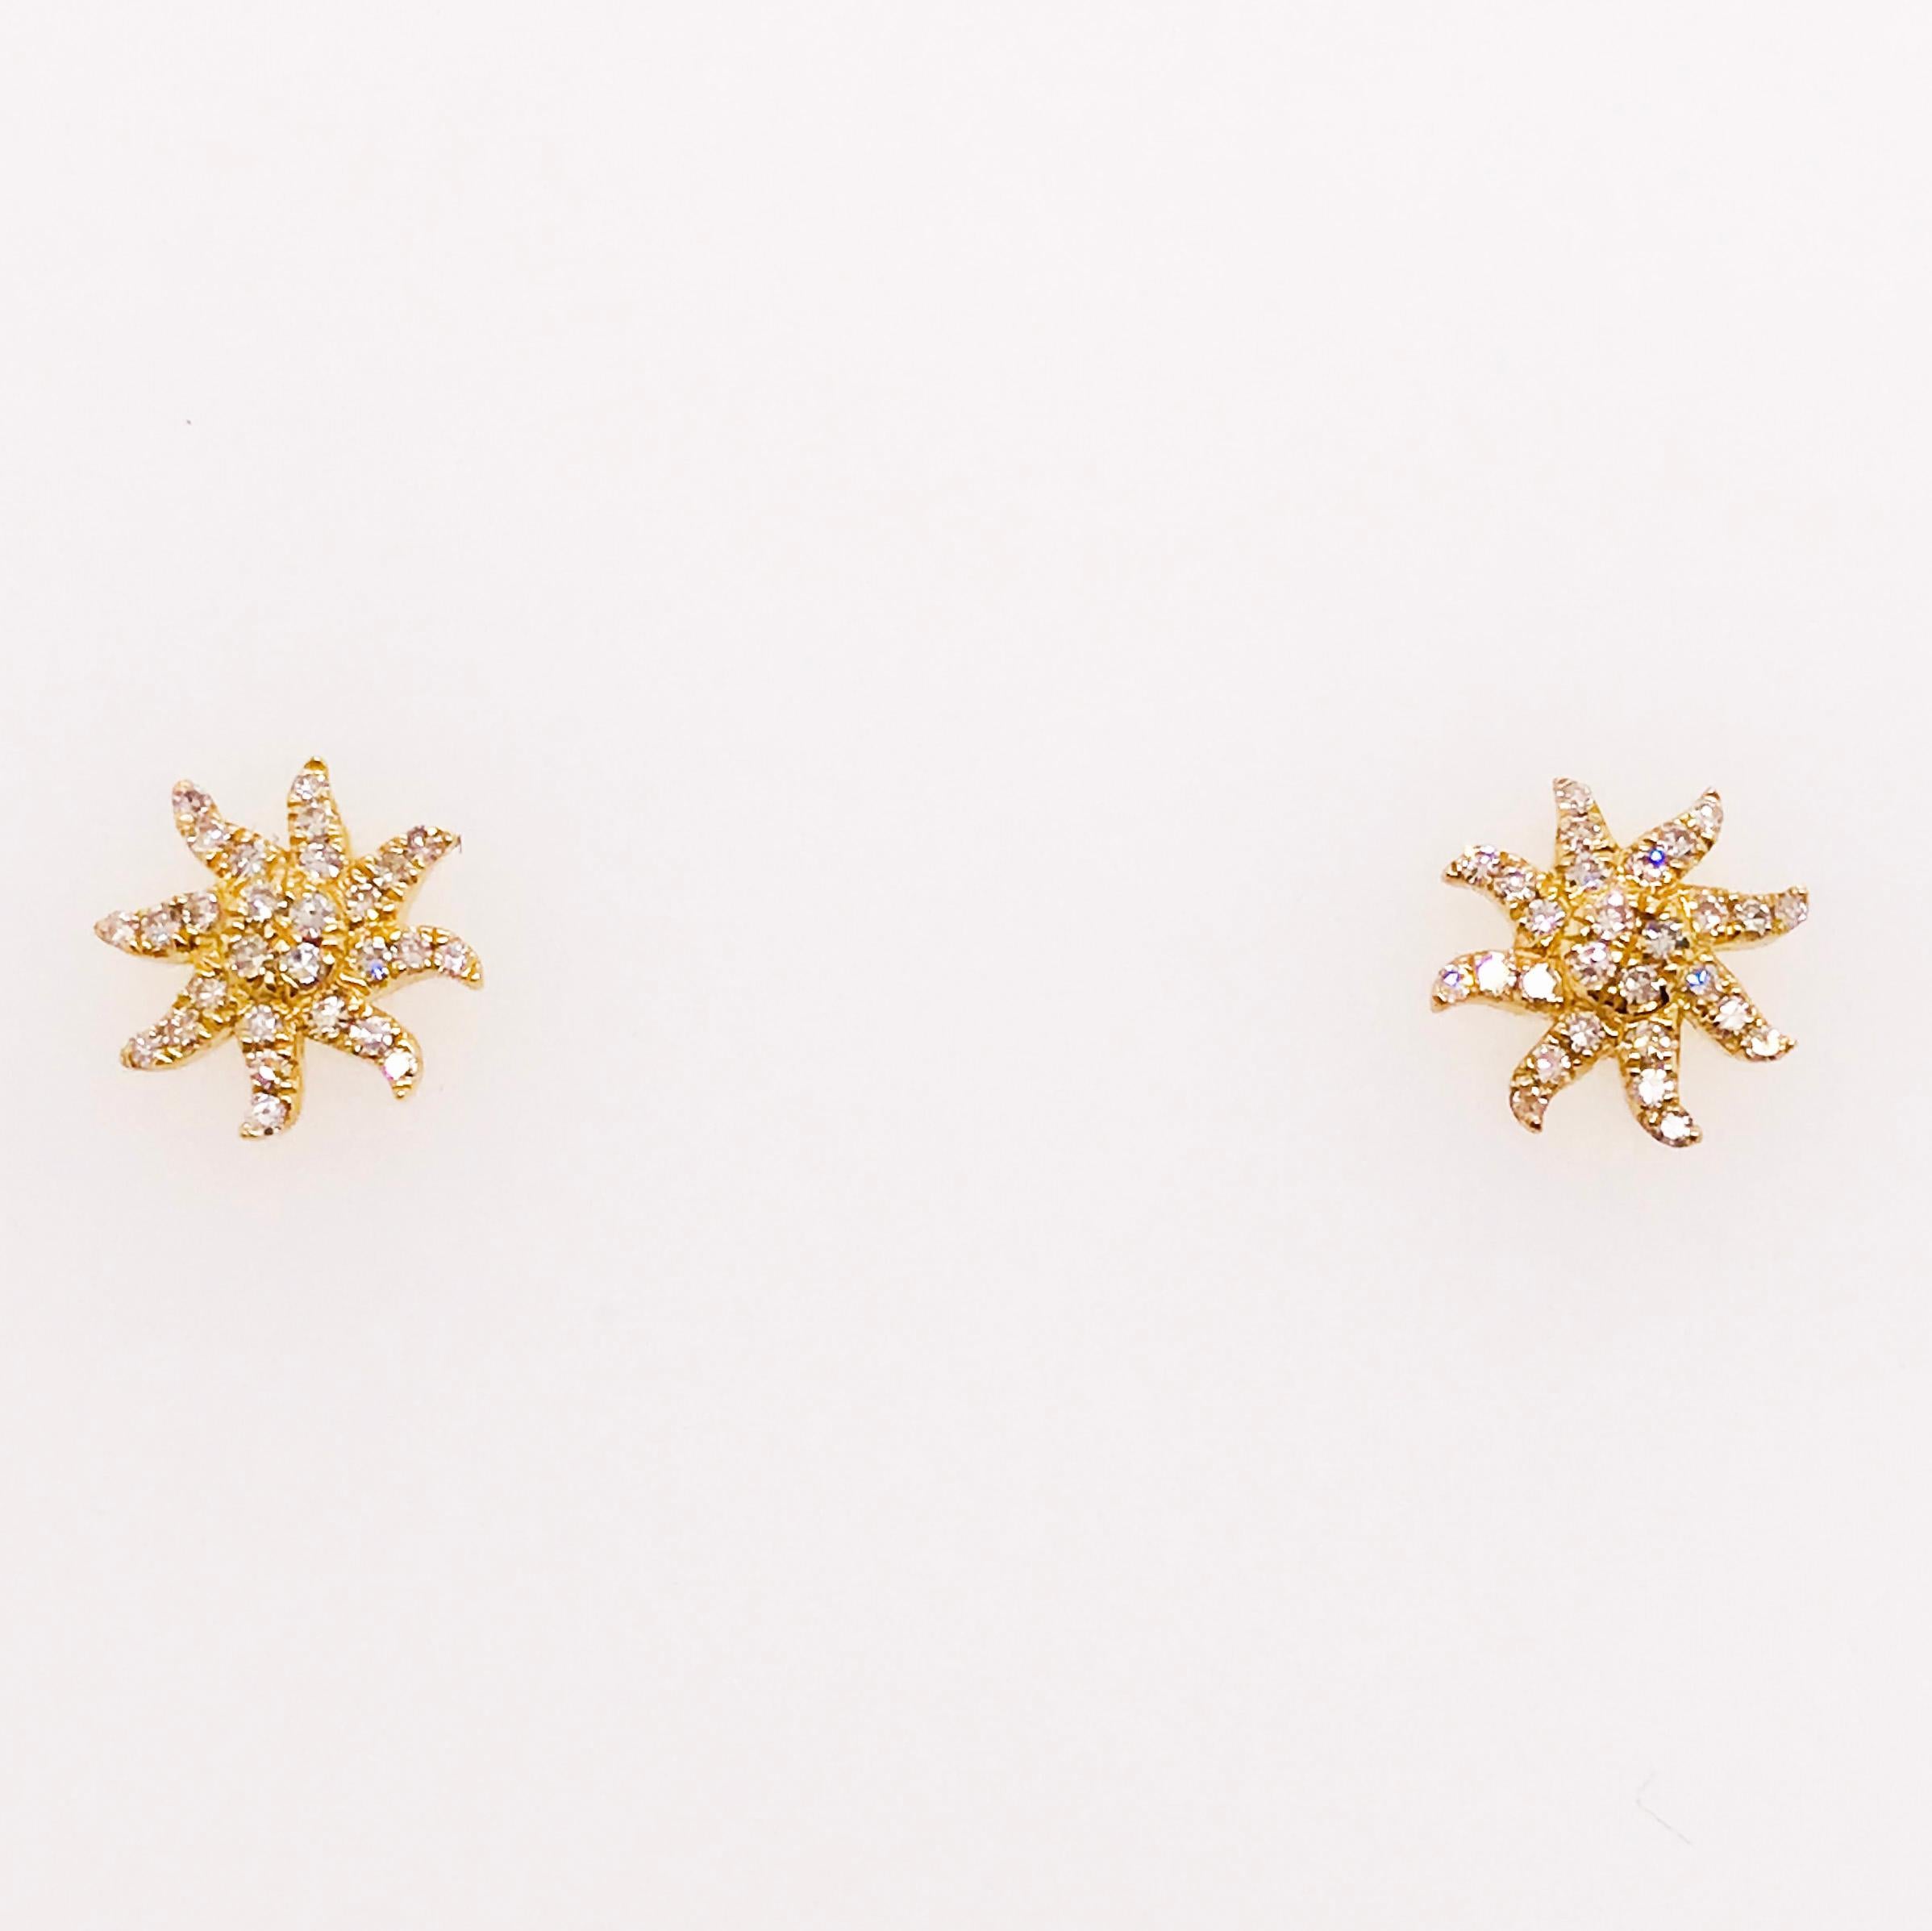 Contemporary Diamond Starburst Earring Studs in 14 Karat Gold, Diamond Sun Earring Studs